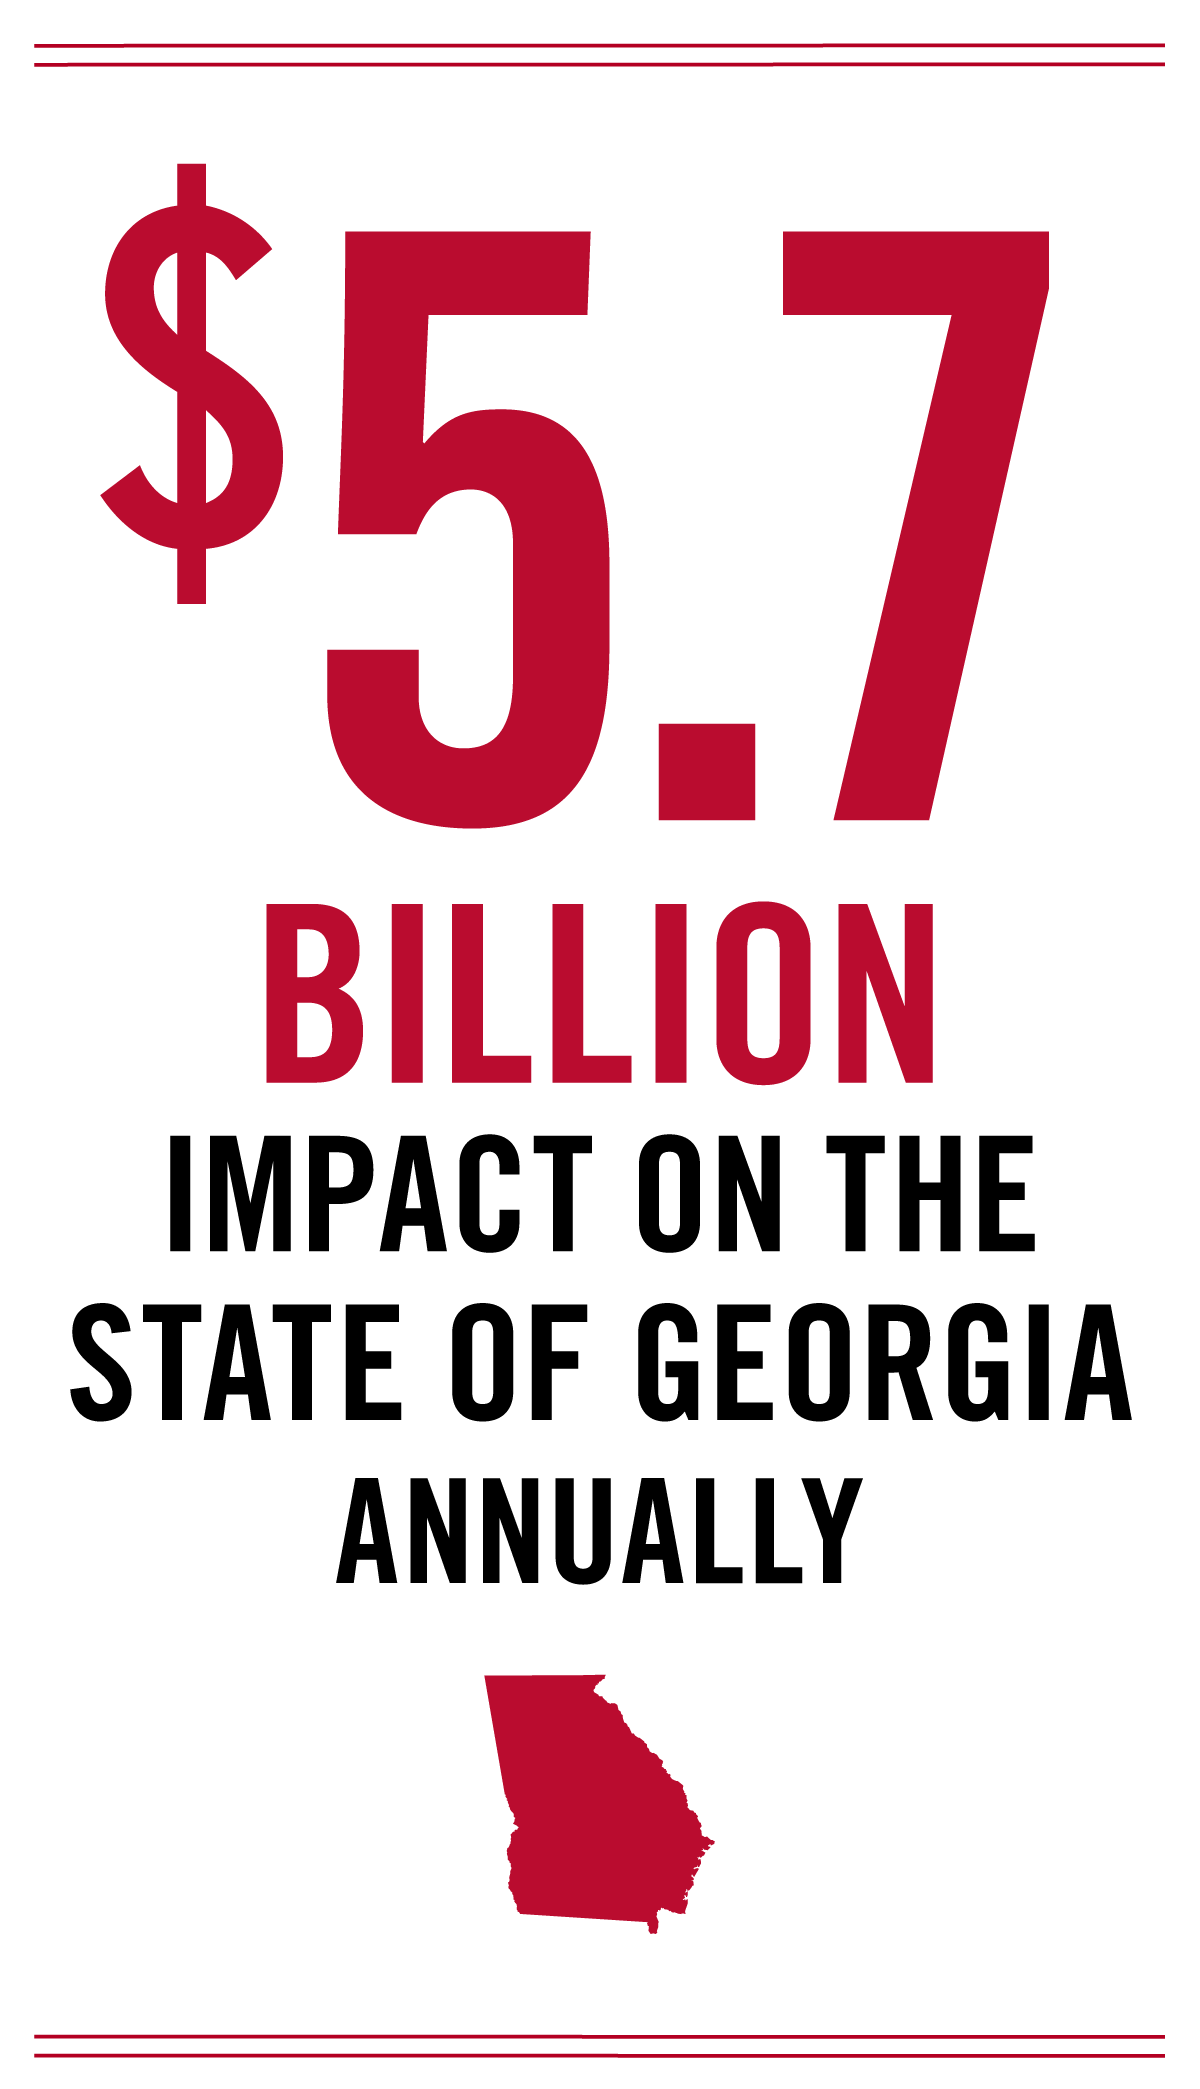 $5.7 billion impact on the state of Georgia annually